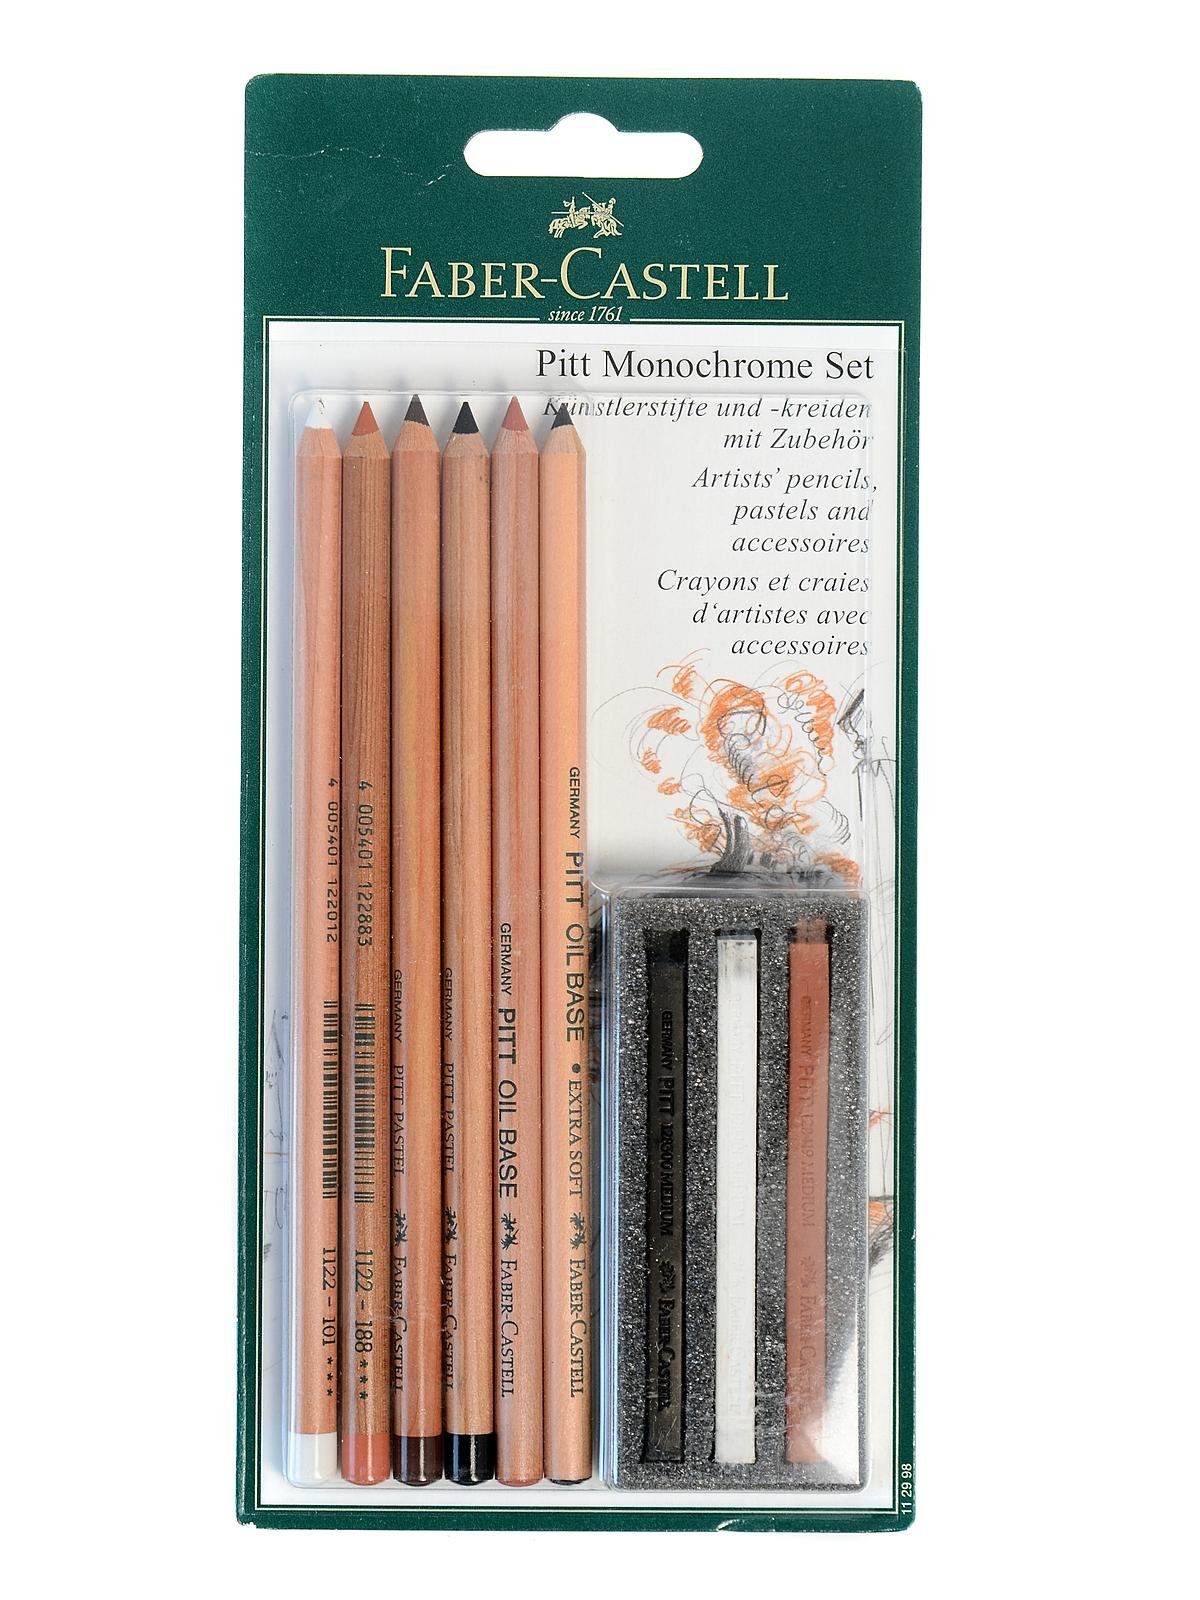 Pitt Monochrome Set of 12 pencils charcoal eraser pastel